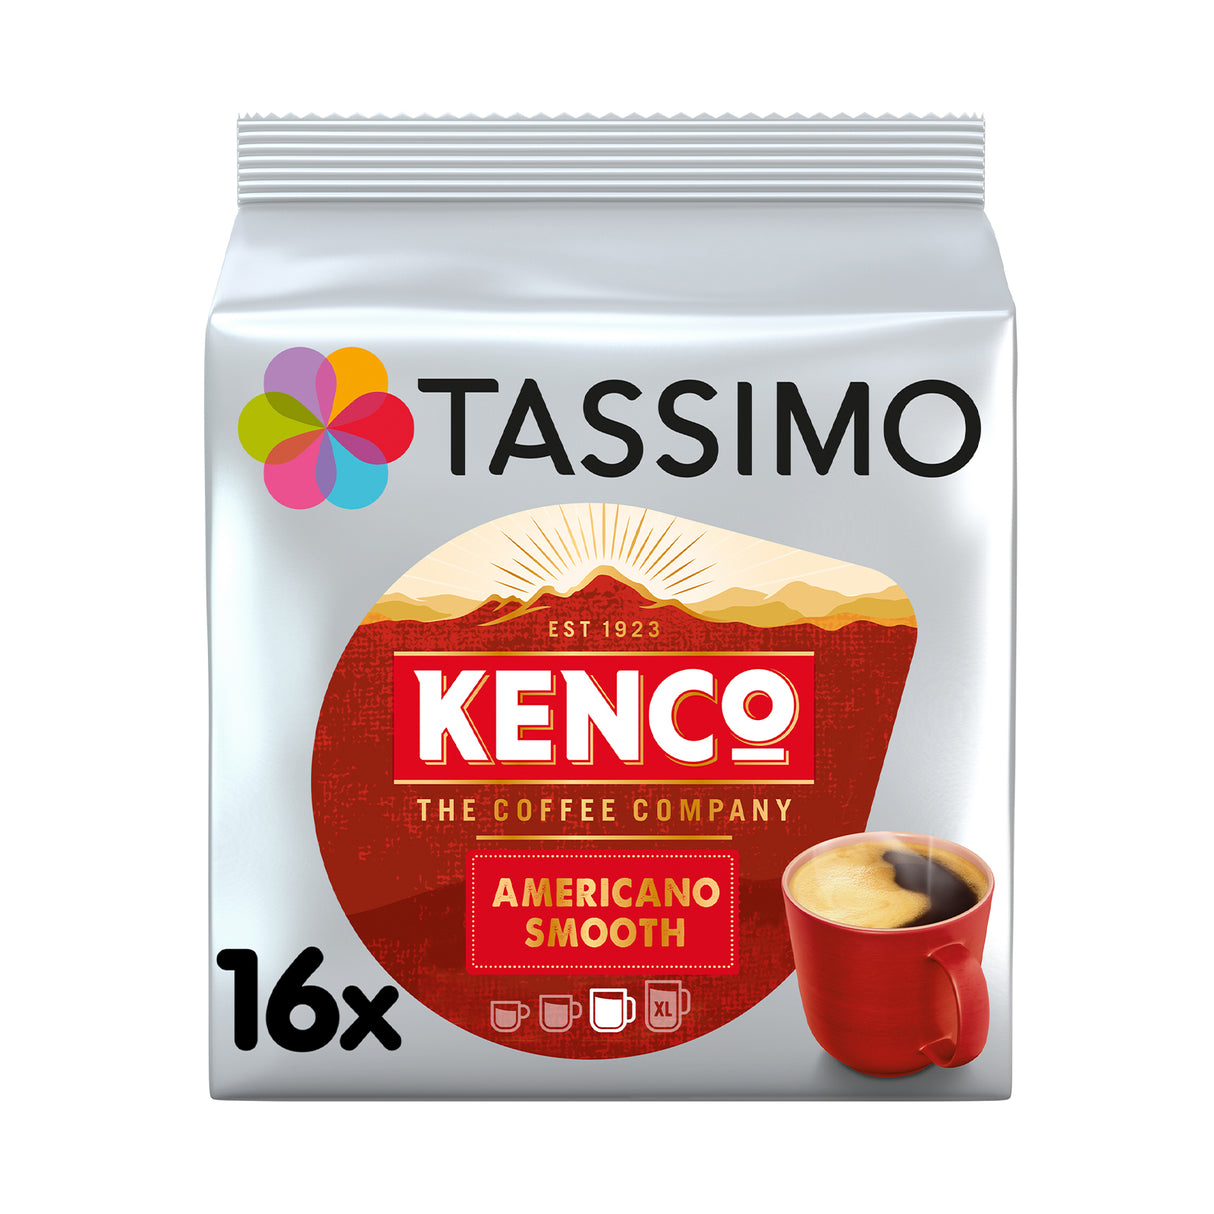 Tassimo Kenco Americano Smooth pack